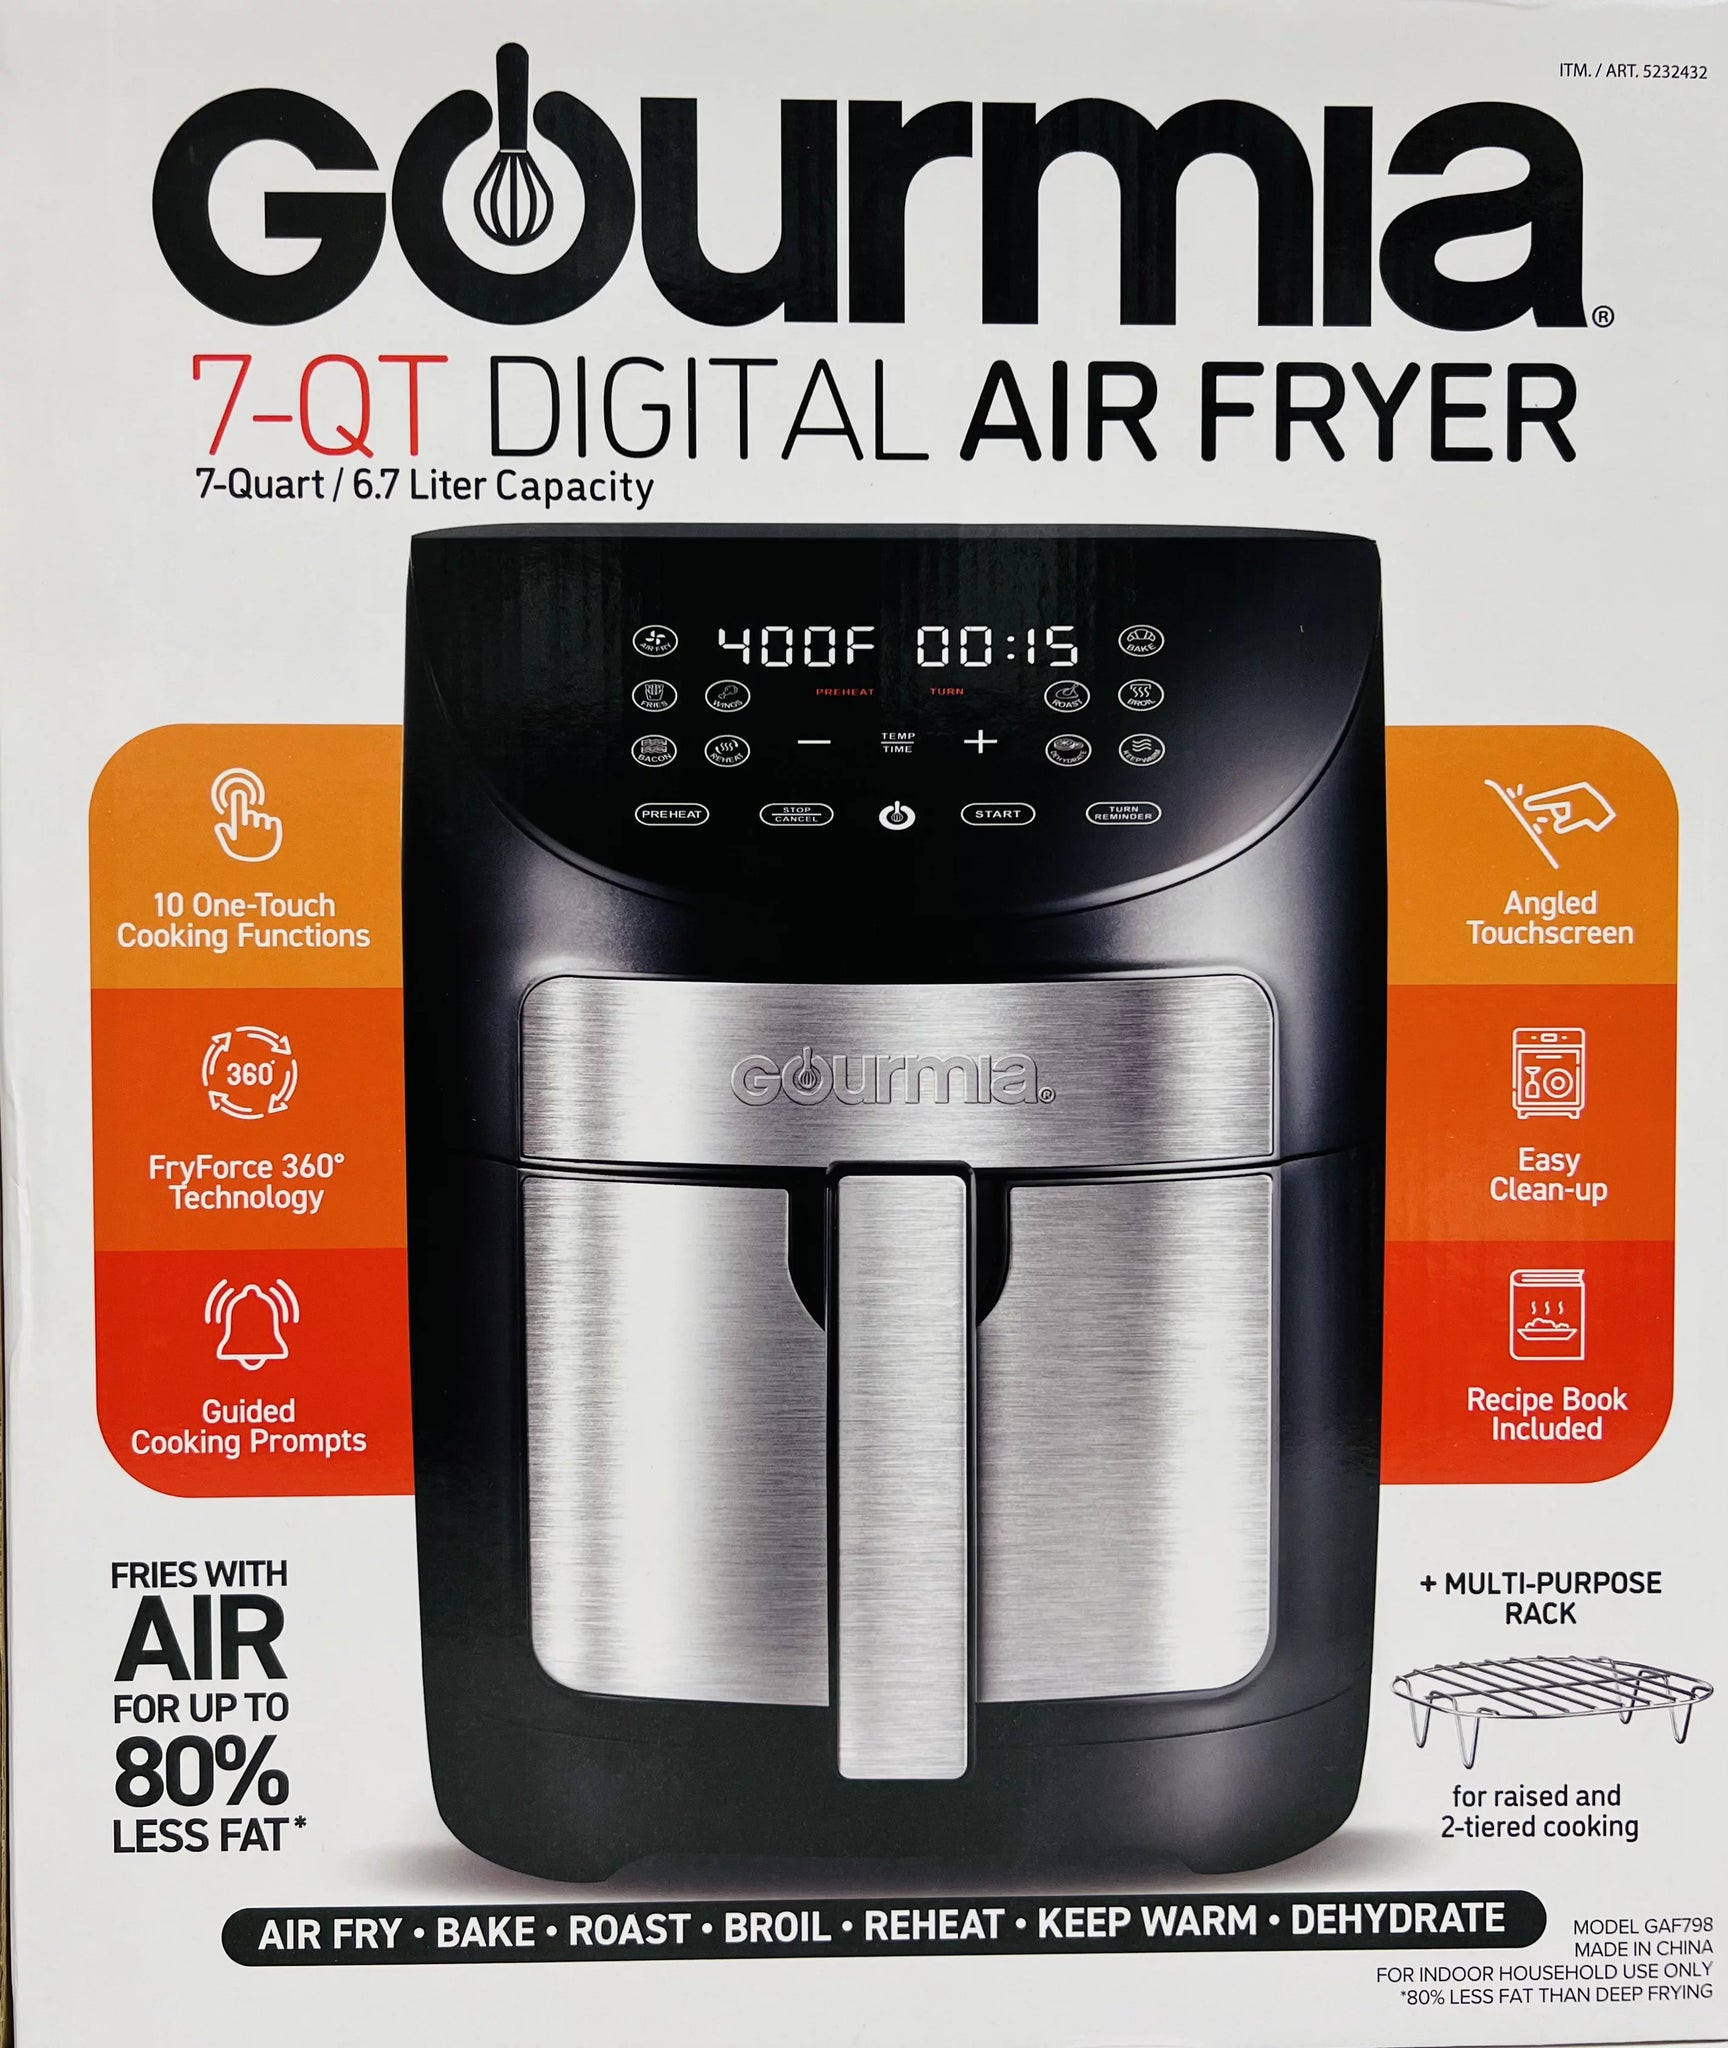 Gourmia 4-quart digital air fryer review